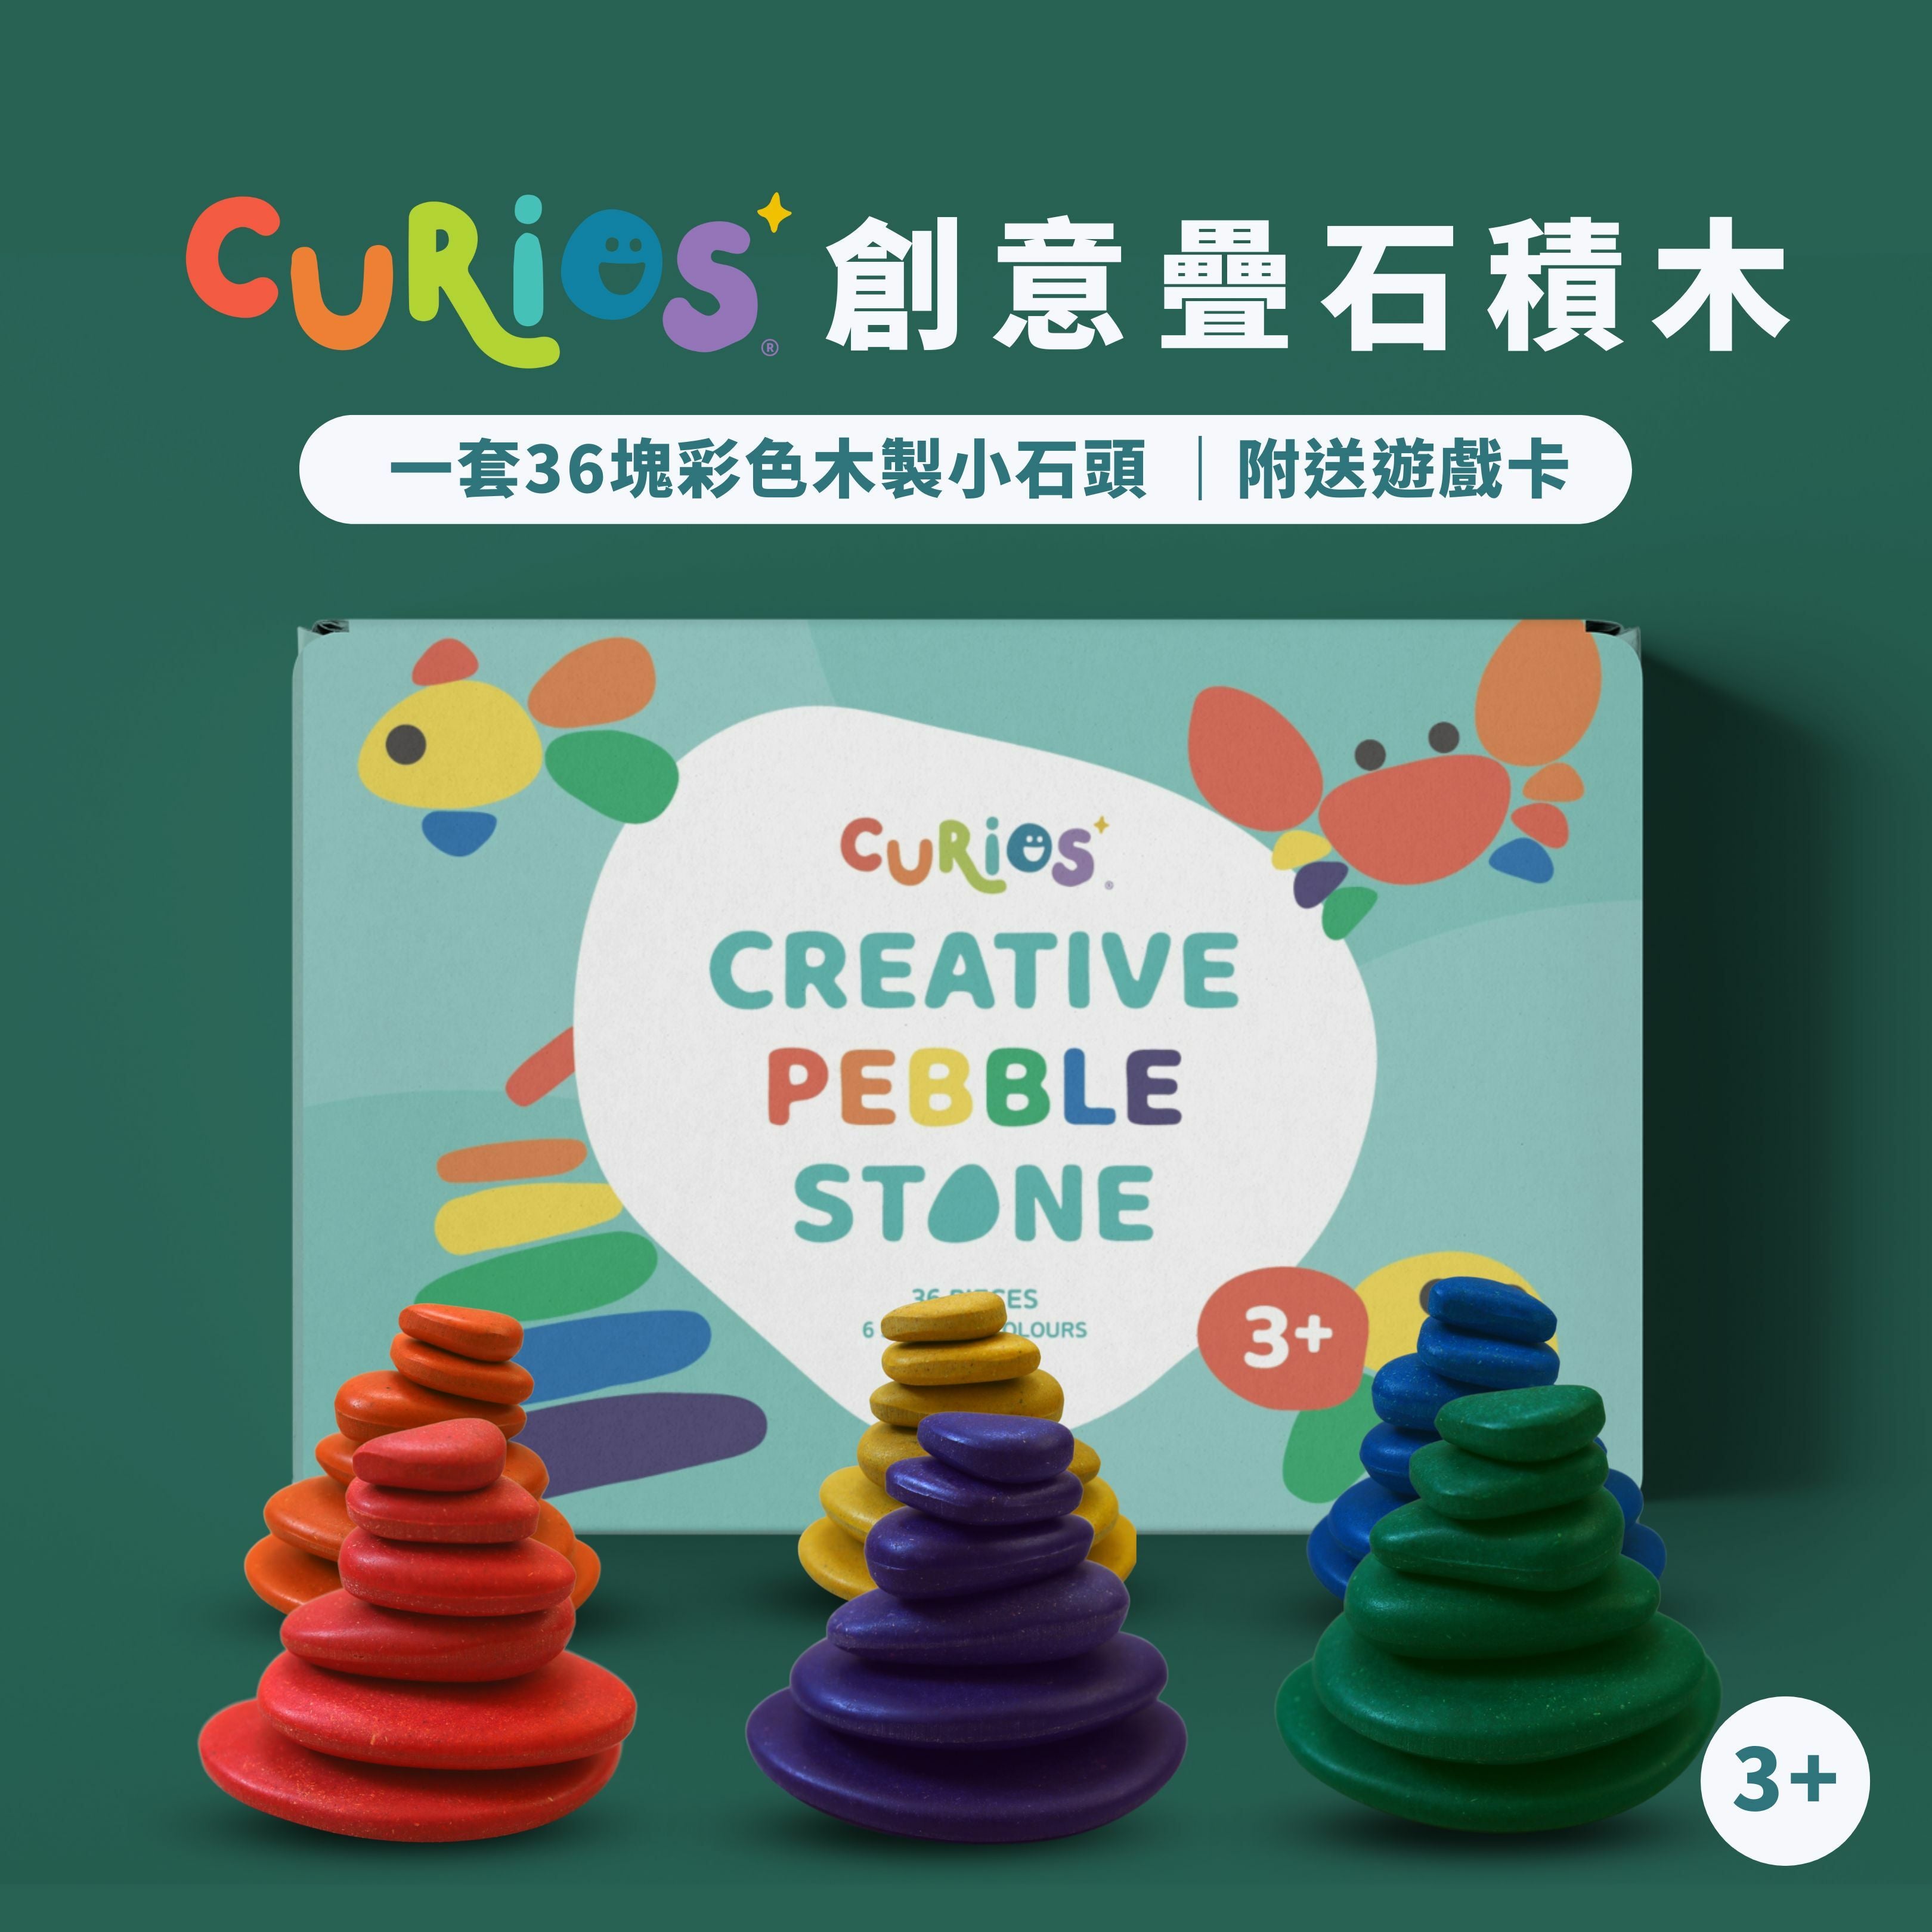 Curios - Creative Pebble Stone